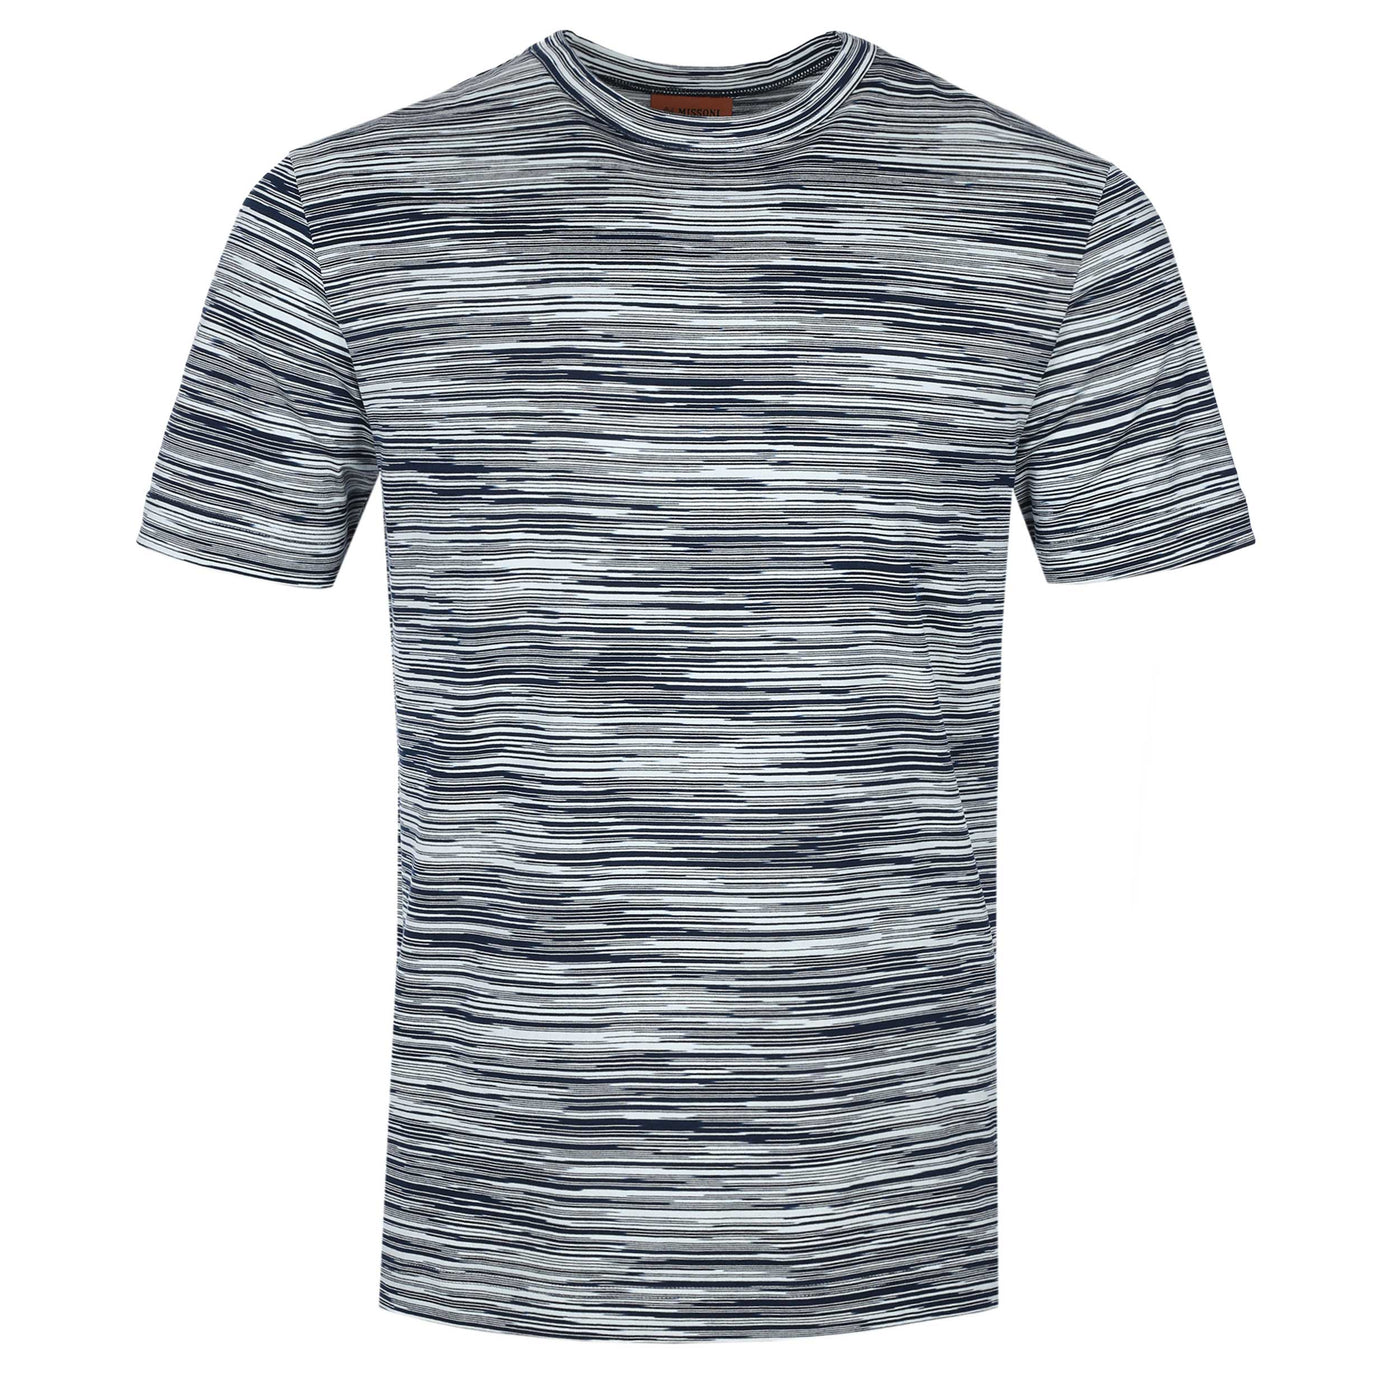 Missoni Stripe T-Shirt in Navy | Missoni | Norton Barrie